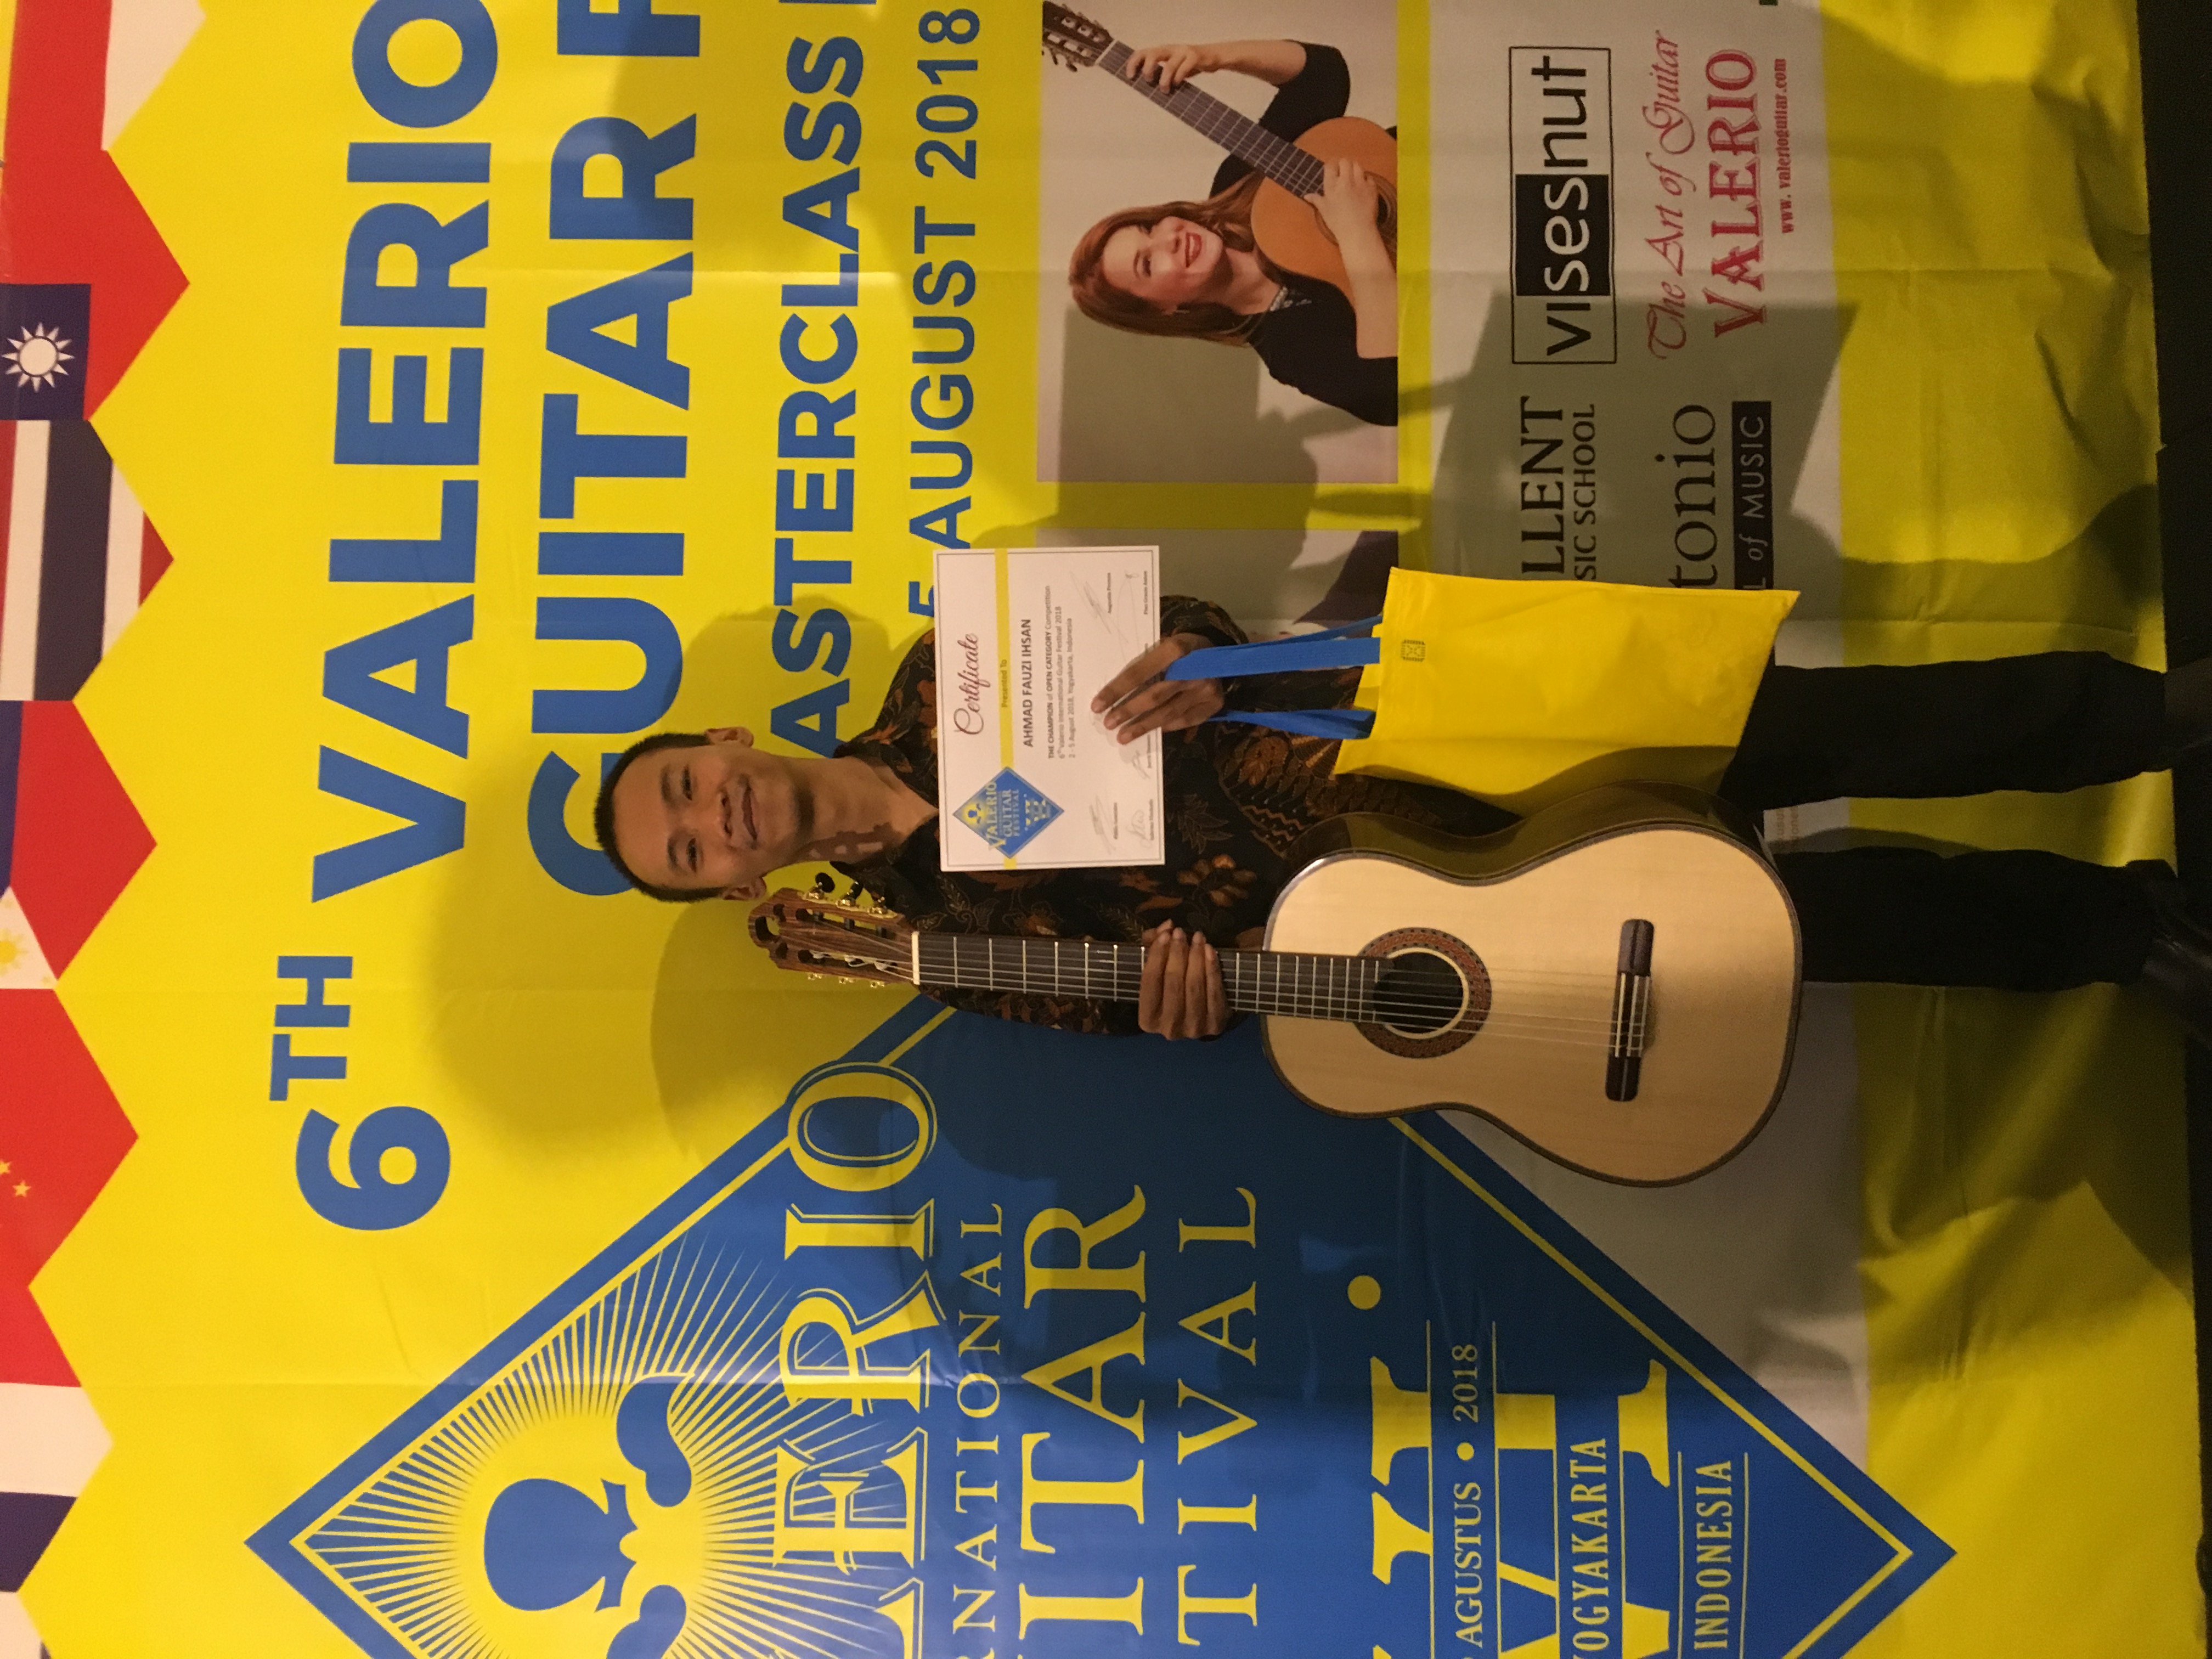 Foto VI Valerio International Guitar Festival 2018